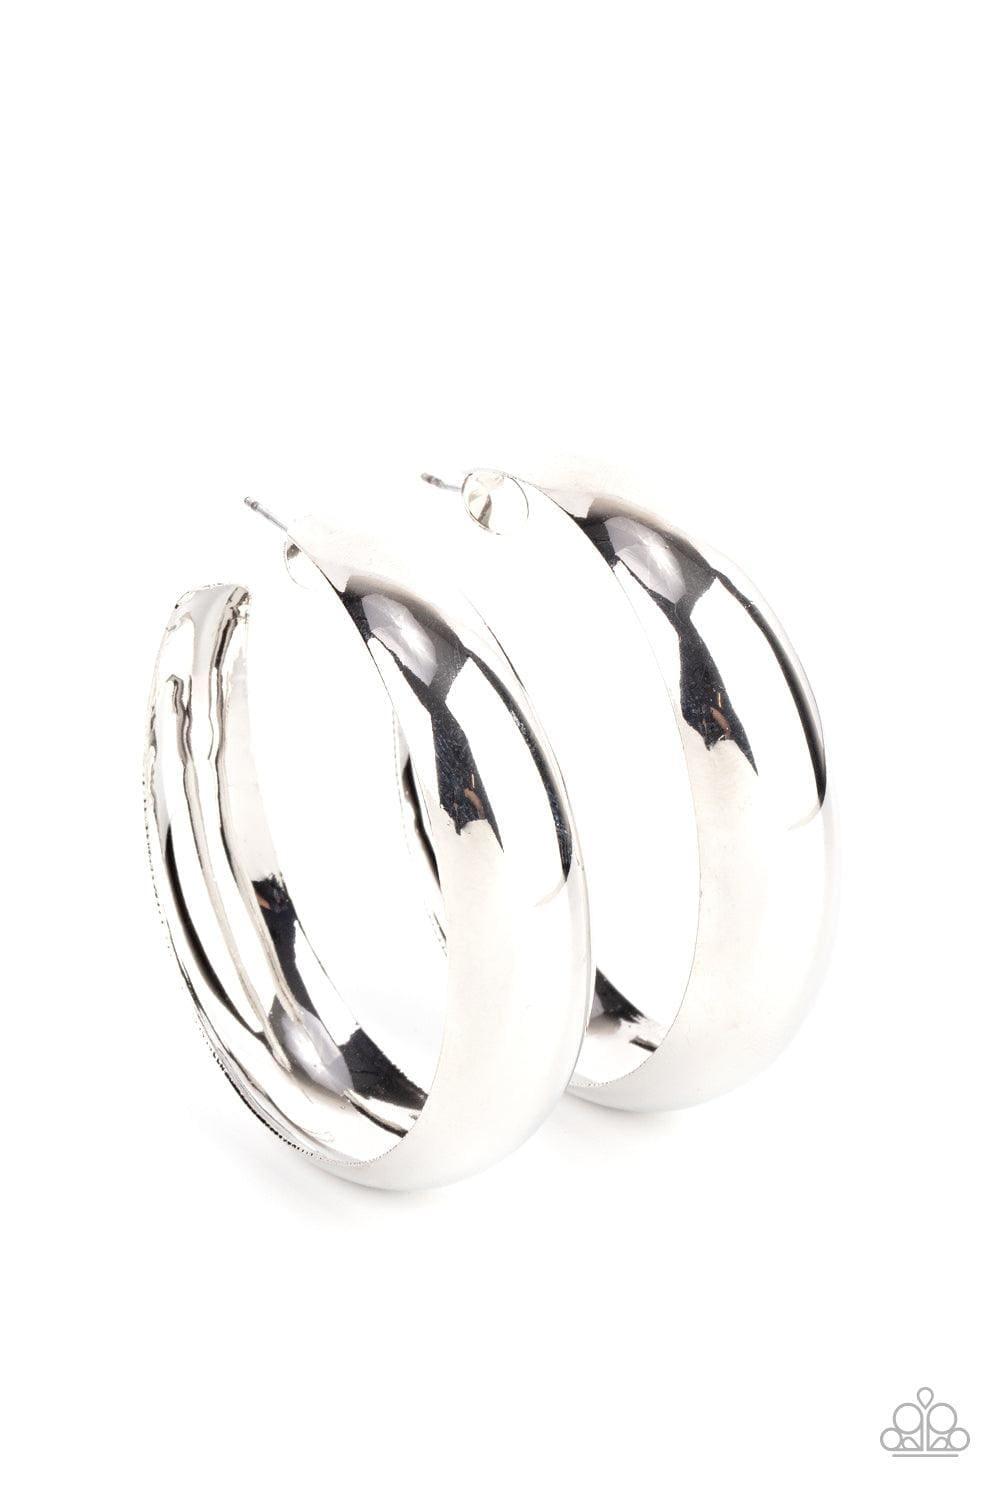 Paparazzi Accessories - Flat Out Flawless - Silver Hoop Earrings - Bling by JessieK